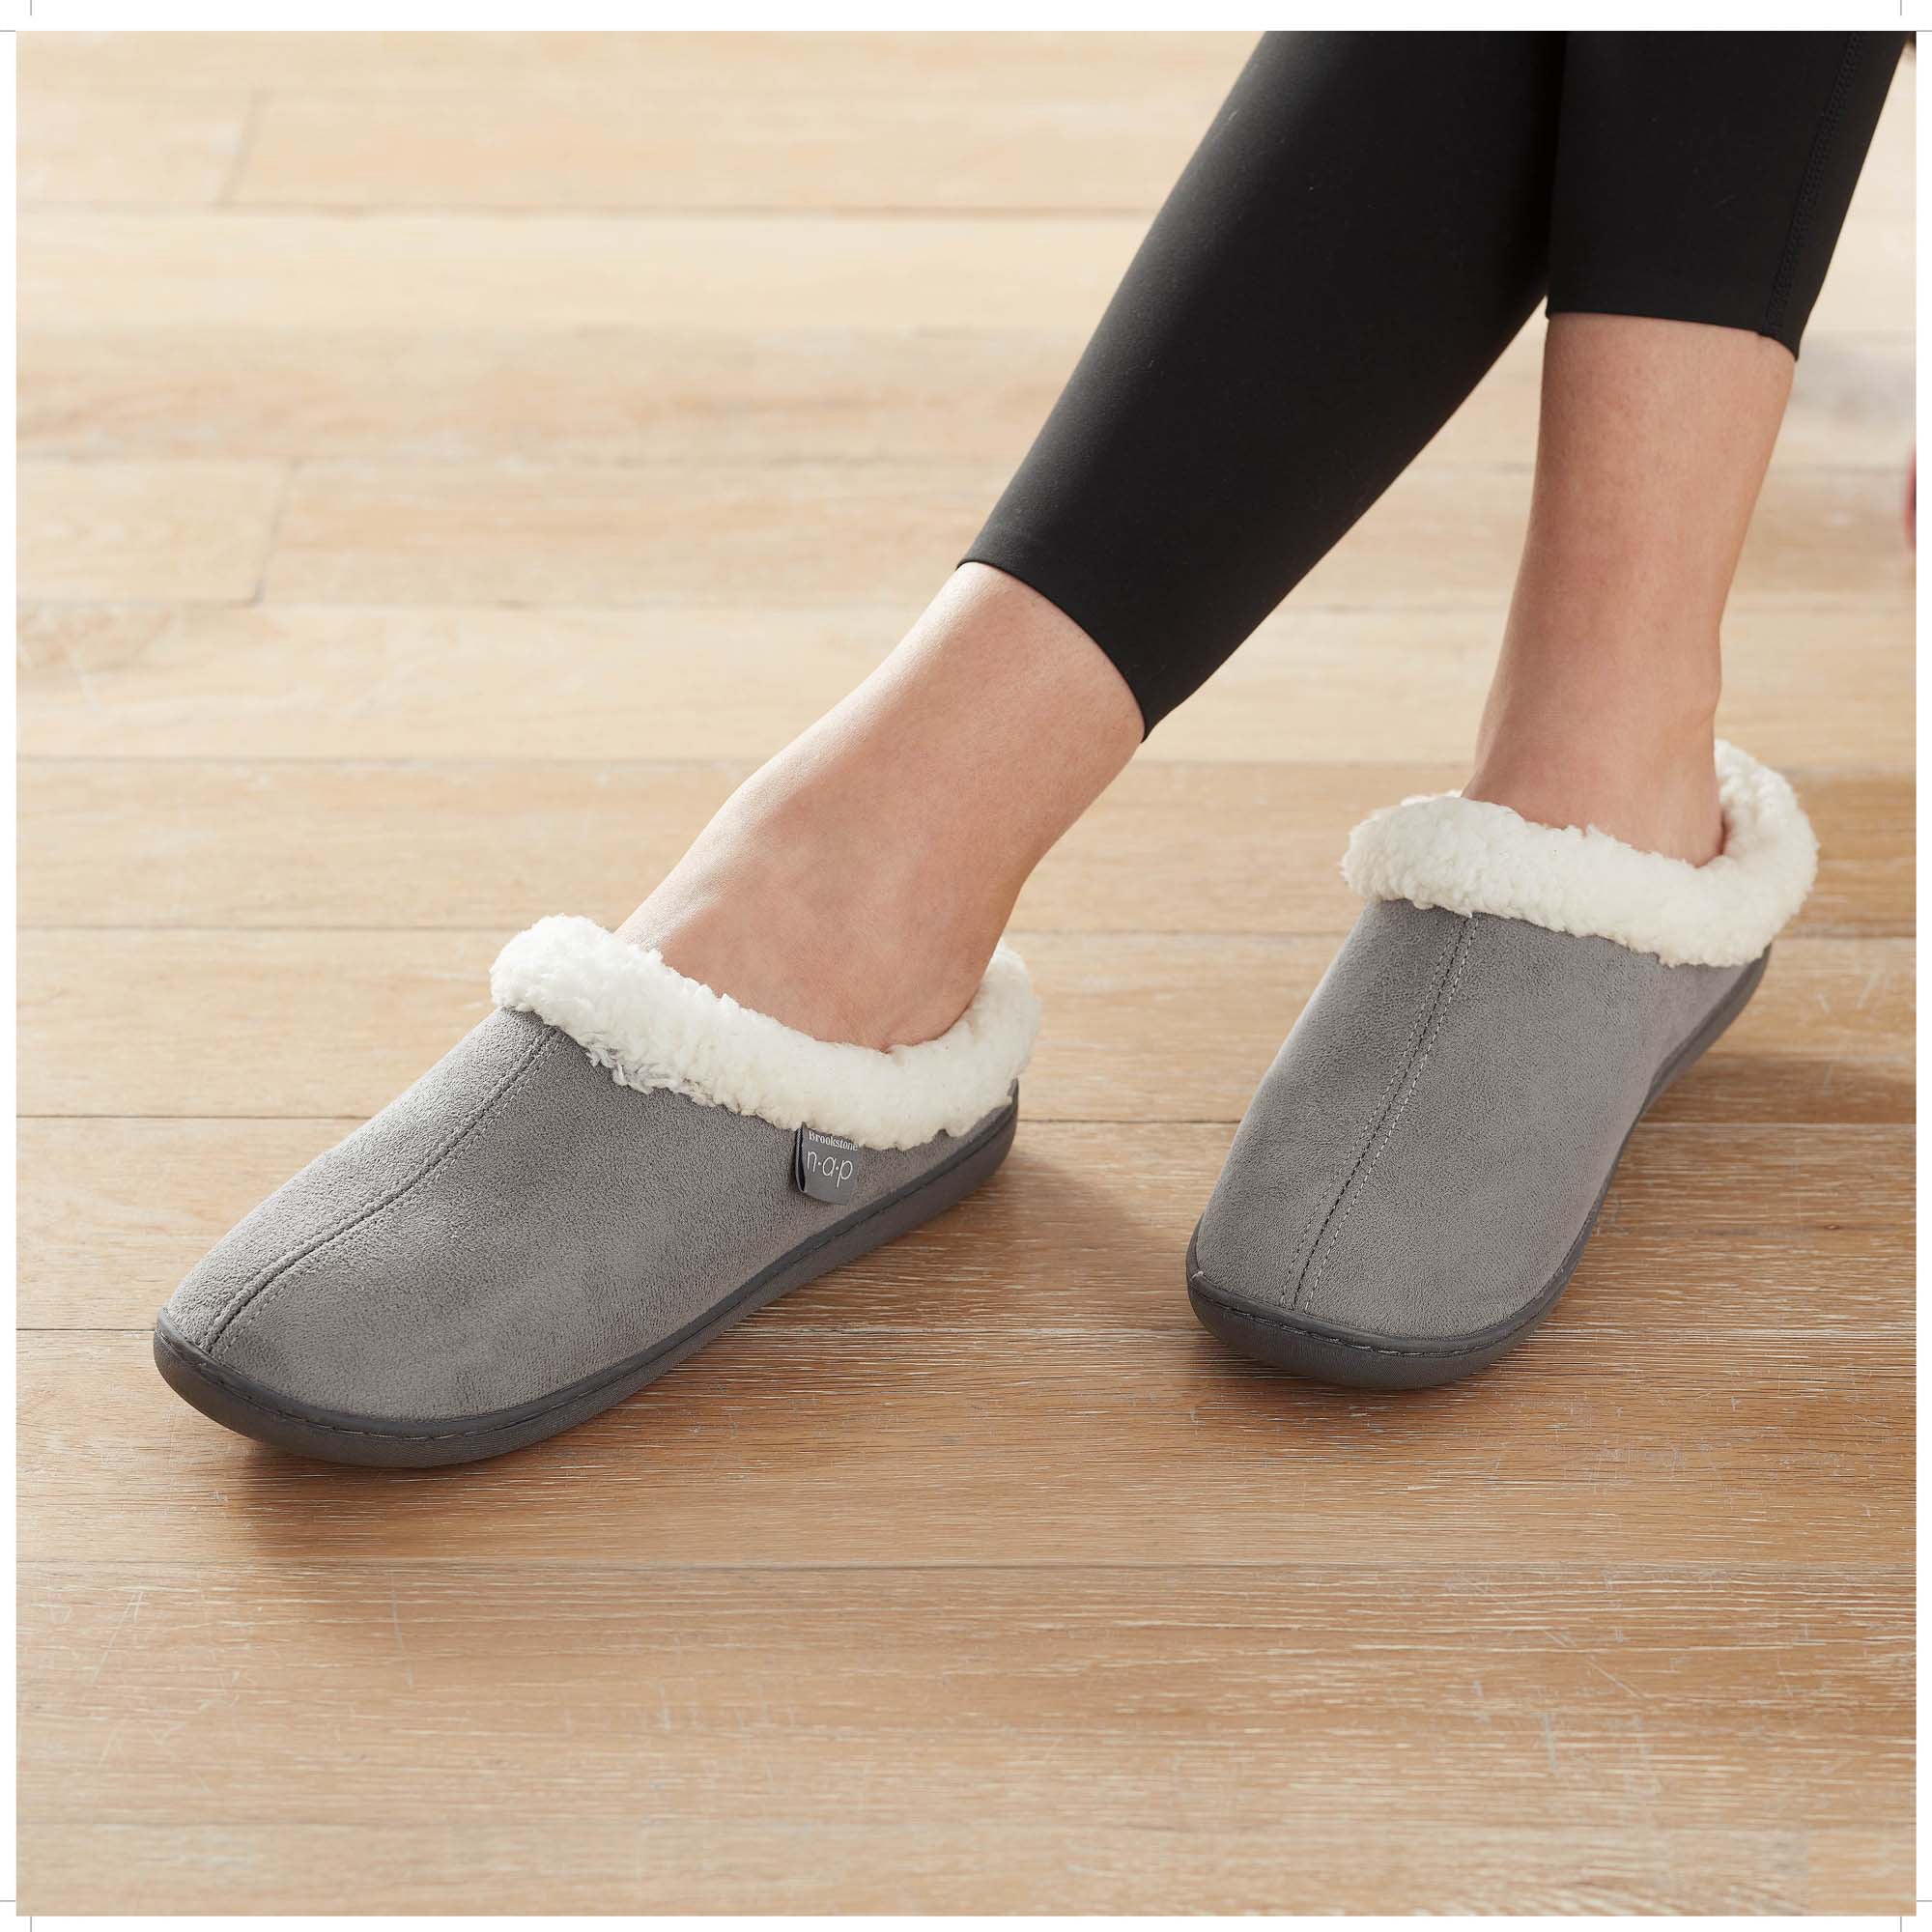 brookstone slippers